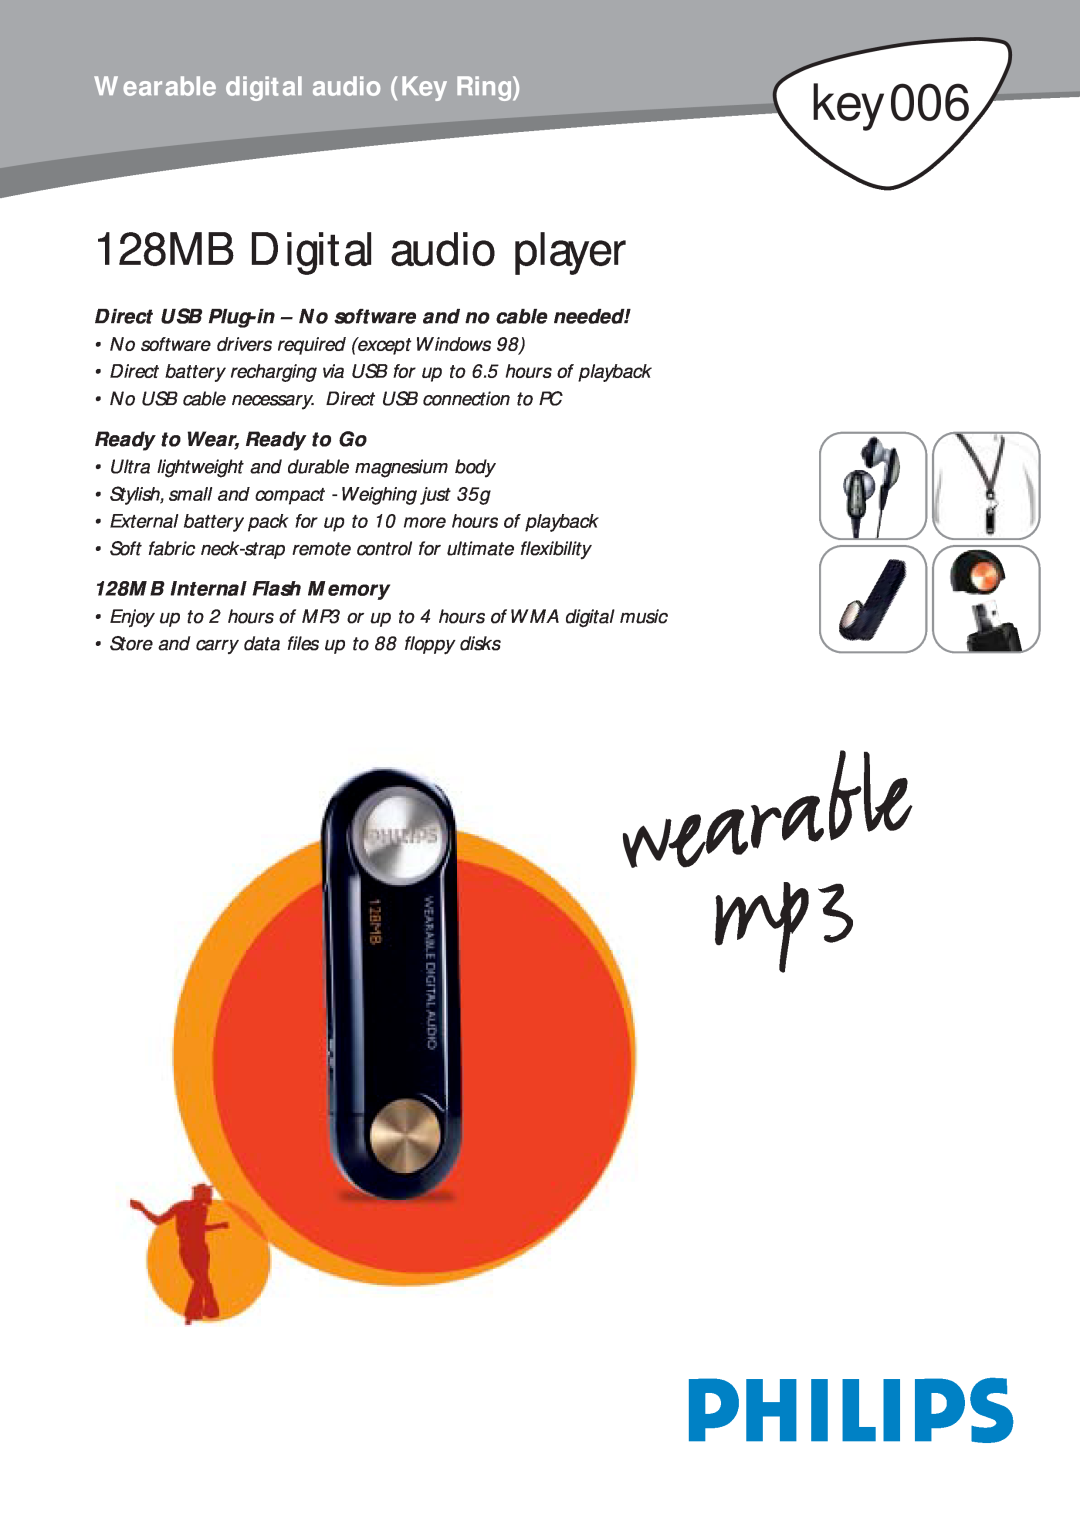 Philips manual key006, 128MB Digital audio player, Wearable digital audio Key Ring, Ready to Wear, Ready to Go 